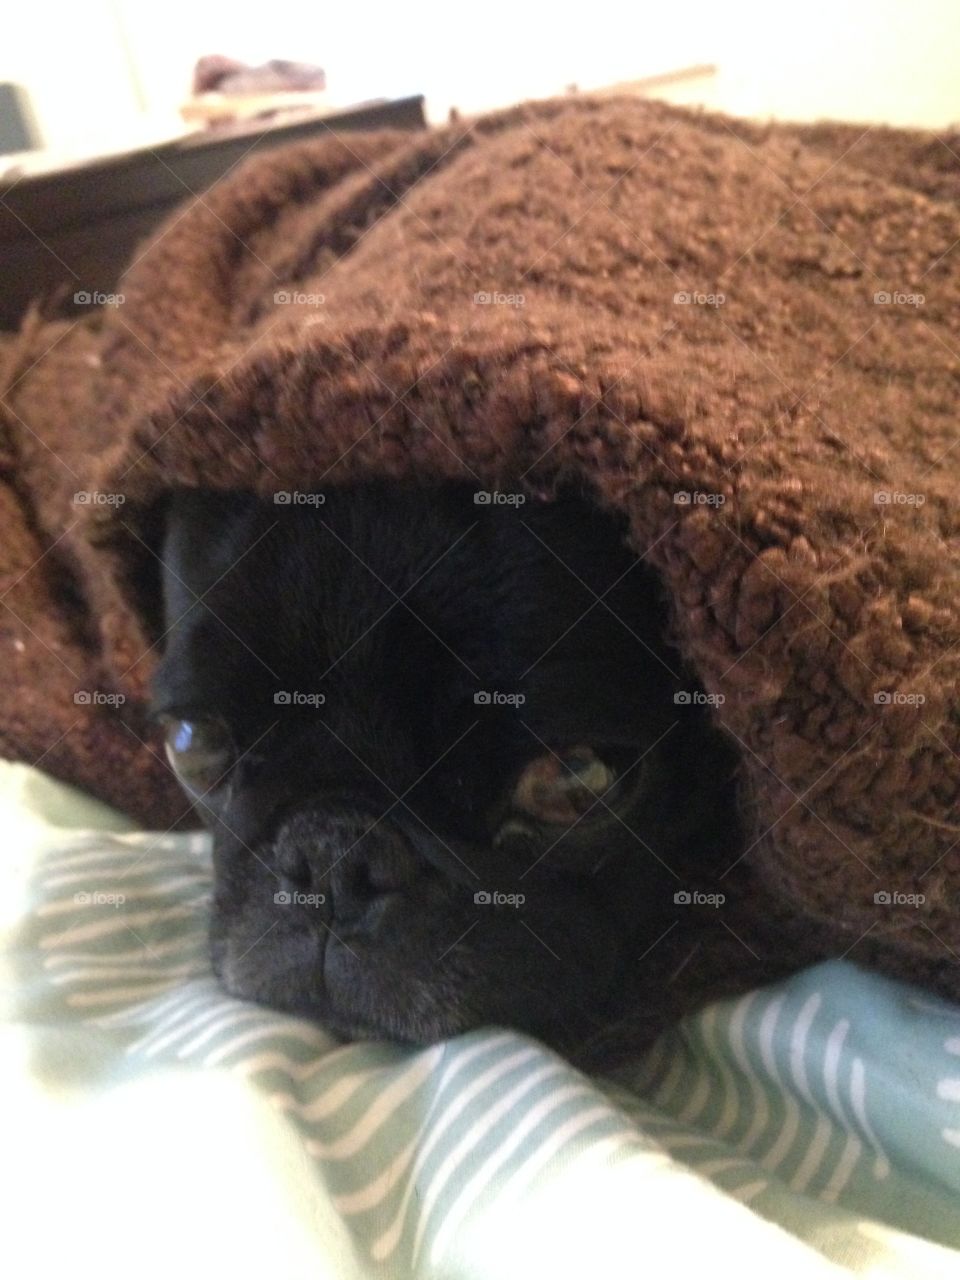 Minnie- pug in a blanket 😜